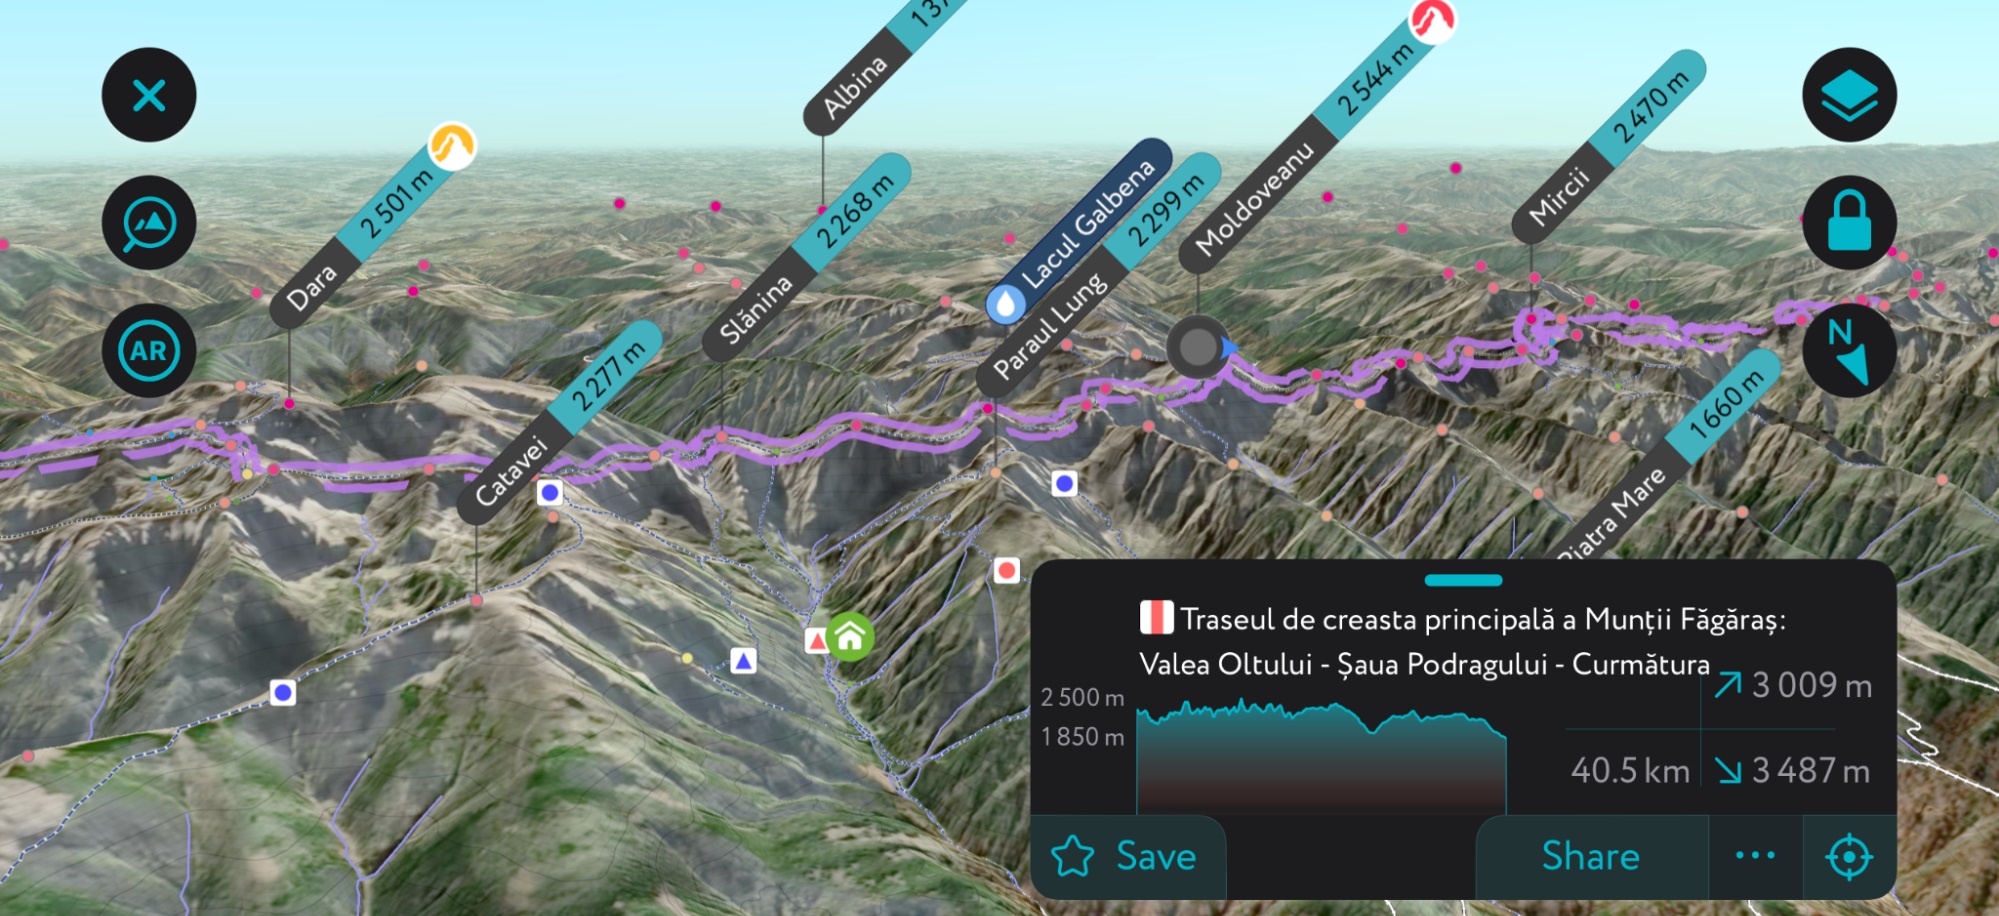 PeakVisor mobile app’s 3D generation of the Făgăraș Mountains, showing the Muntii Făgăraș trail